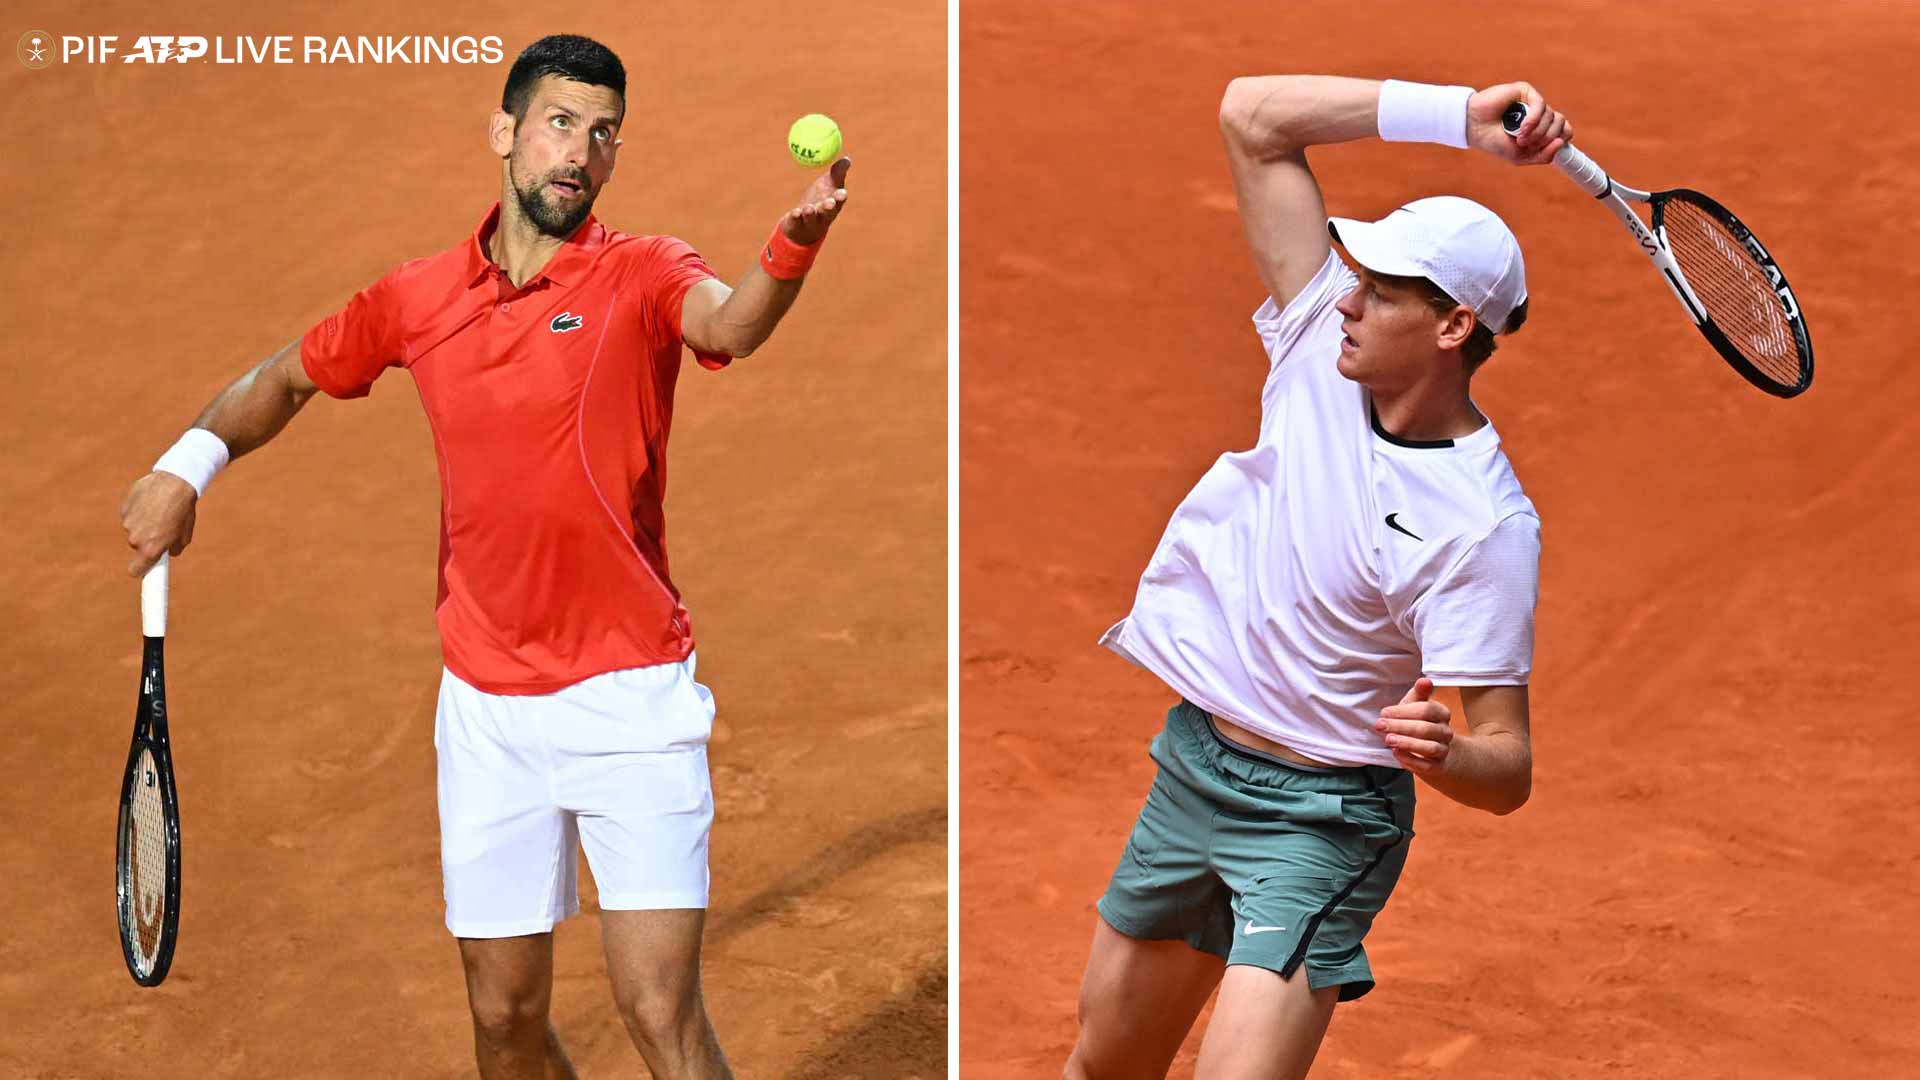 Djokovic vs. Sinner: The battle for World No. 1 at Roland Garros